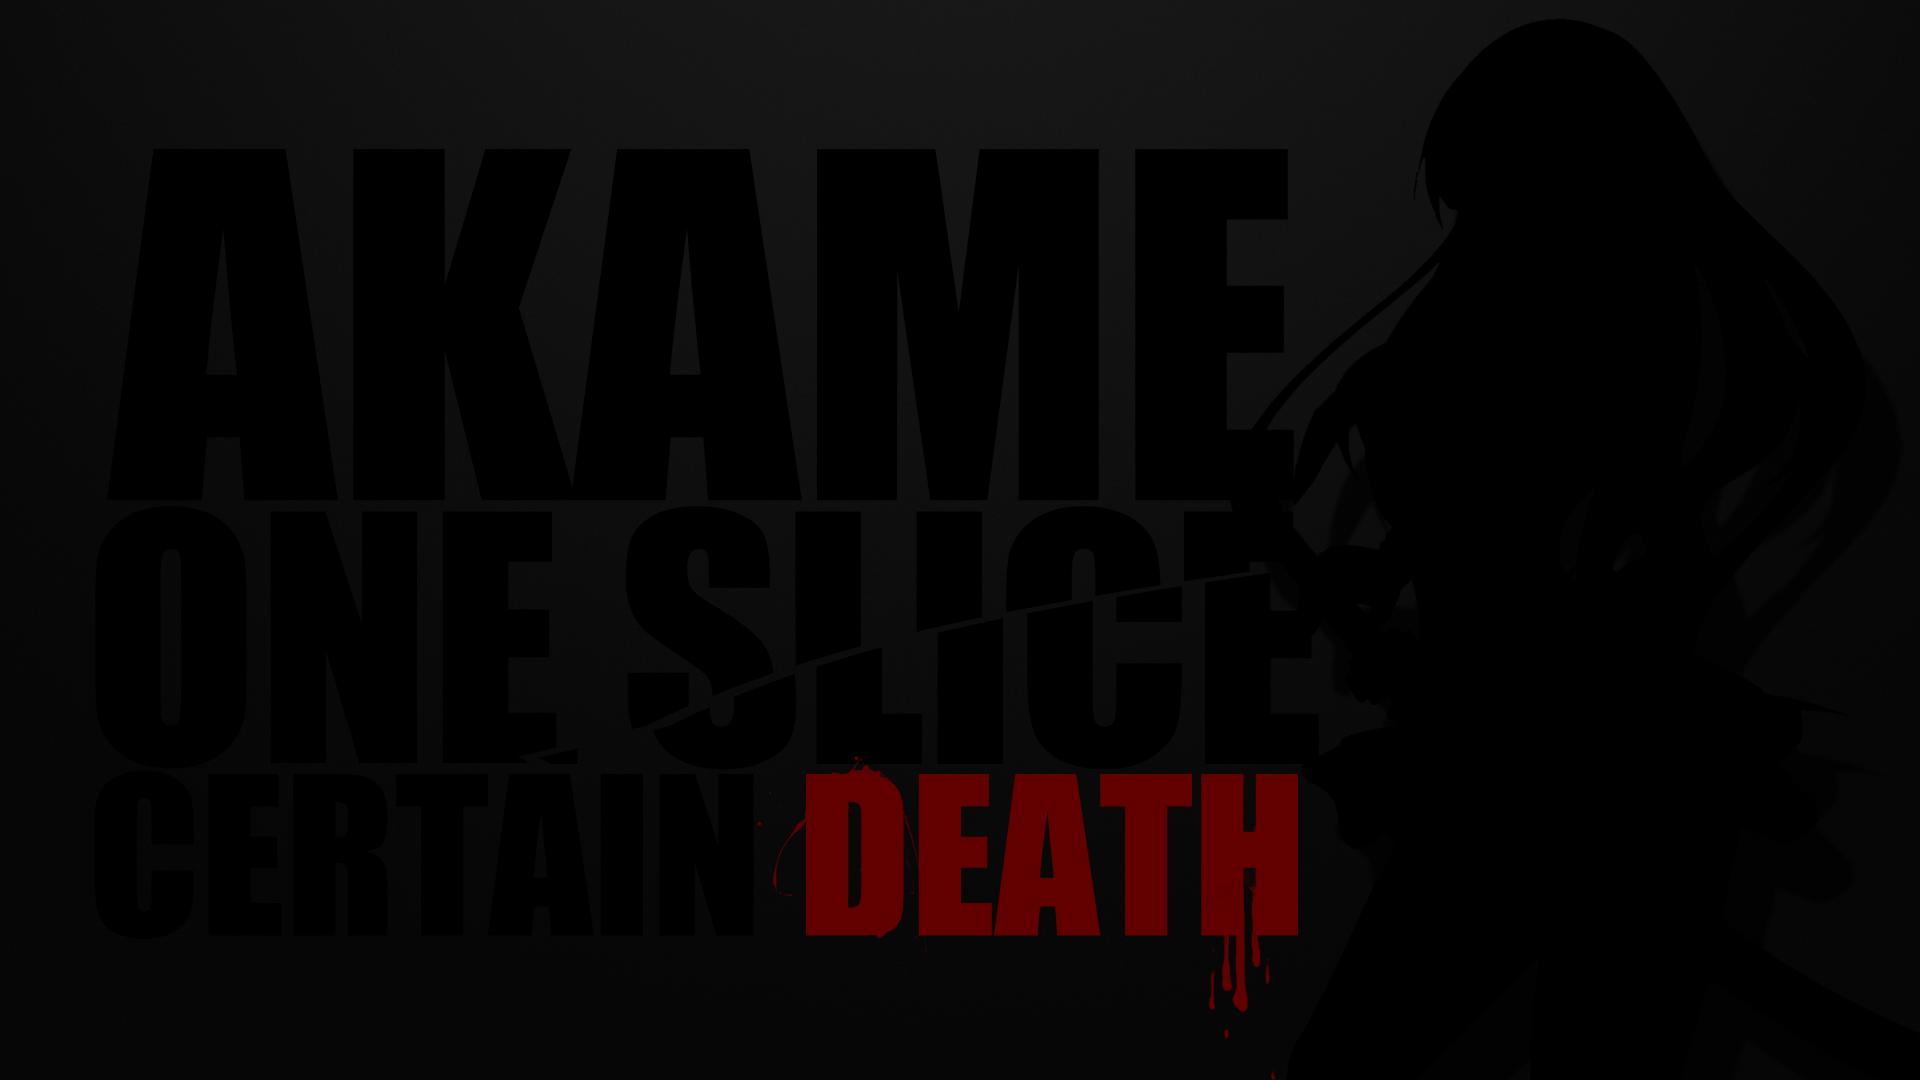 Akame Ga Kill! at 1024 x 1024 iPad size wallpapers HD quality